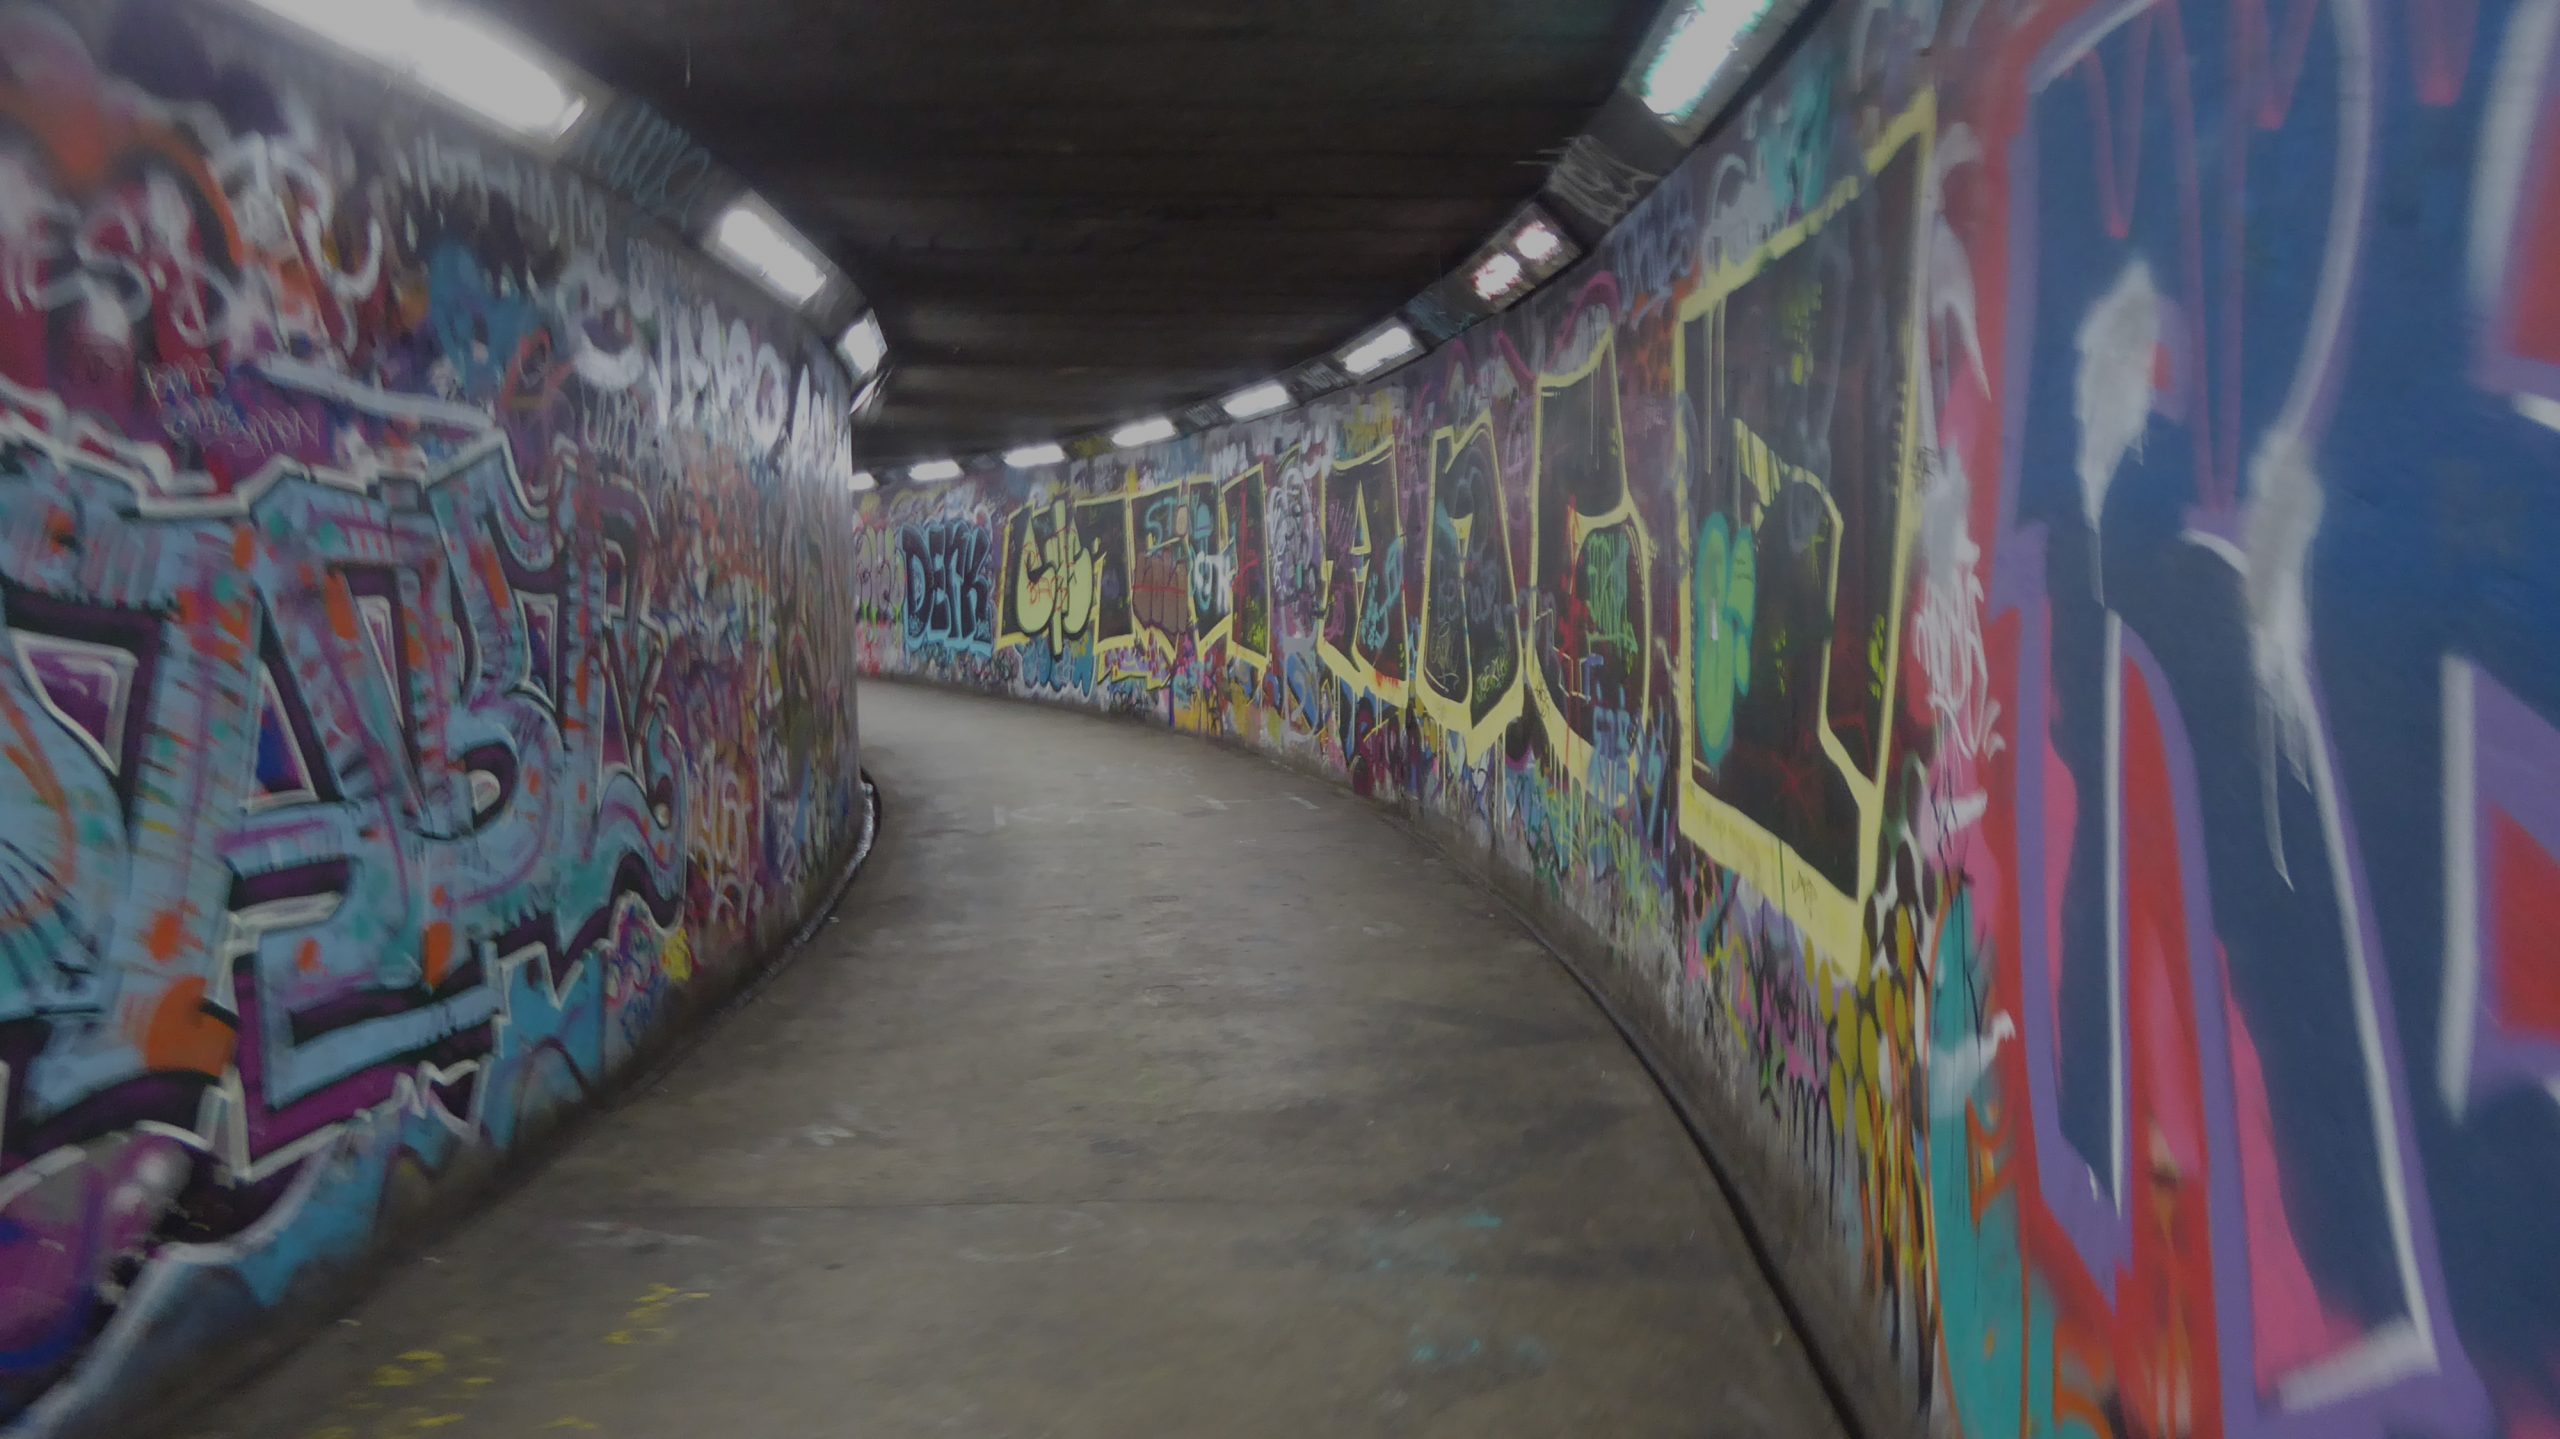 Visualise - A tunnel of progressive art